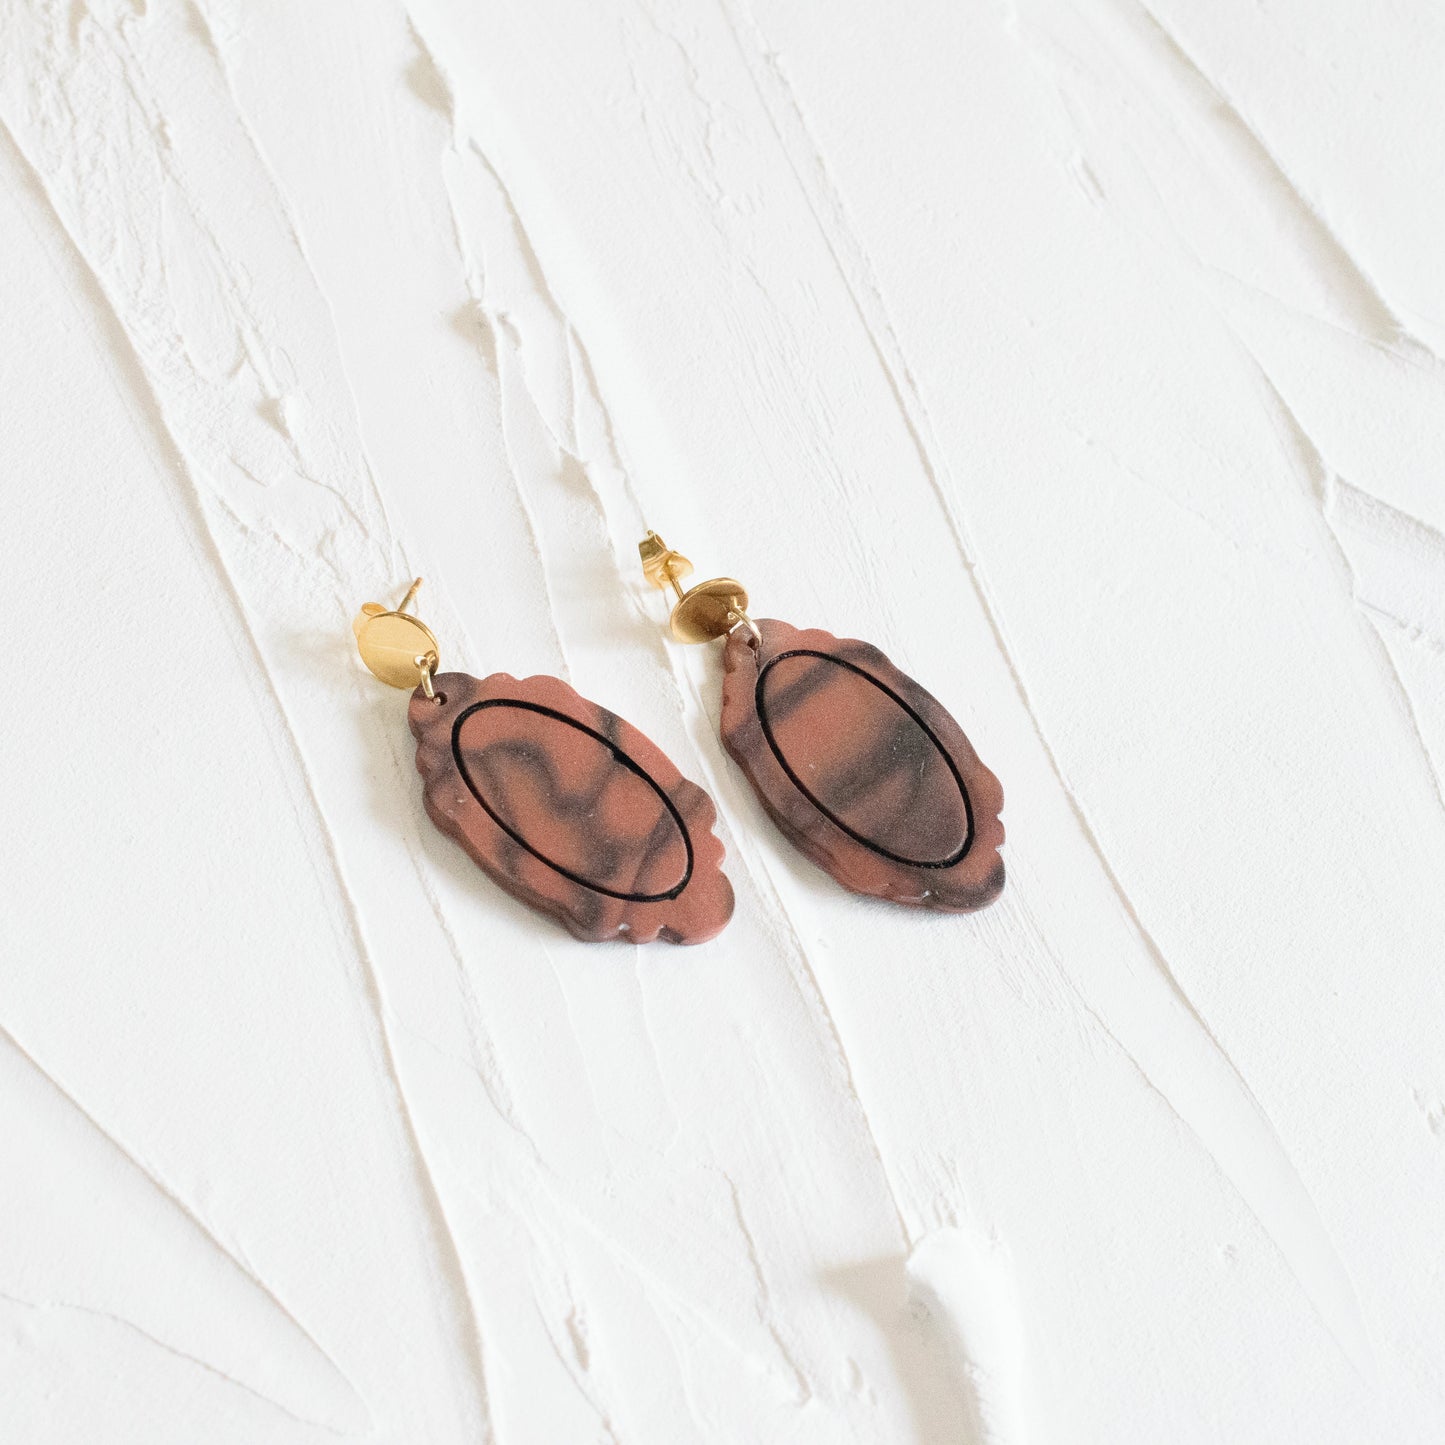 Vintage Oval Framed Marble Earrings - Rust Red - Claymore NZ - Earrings